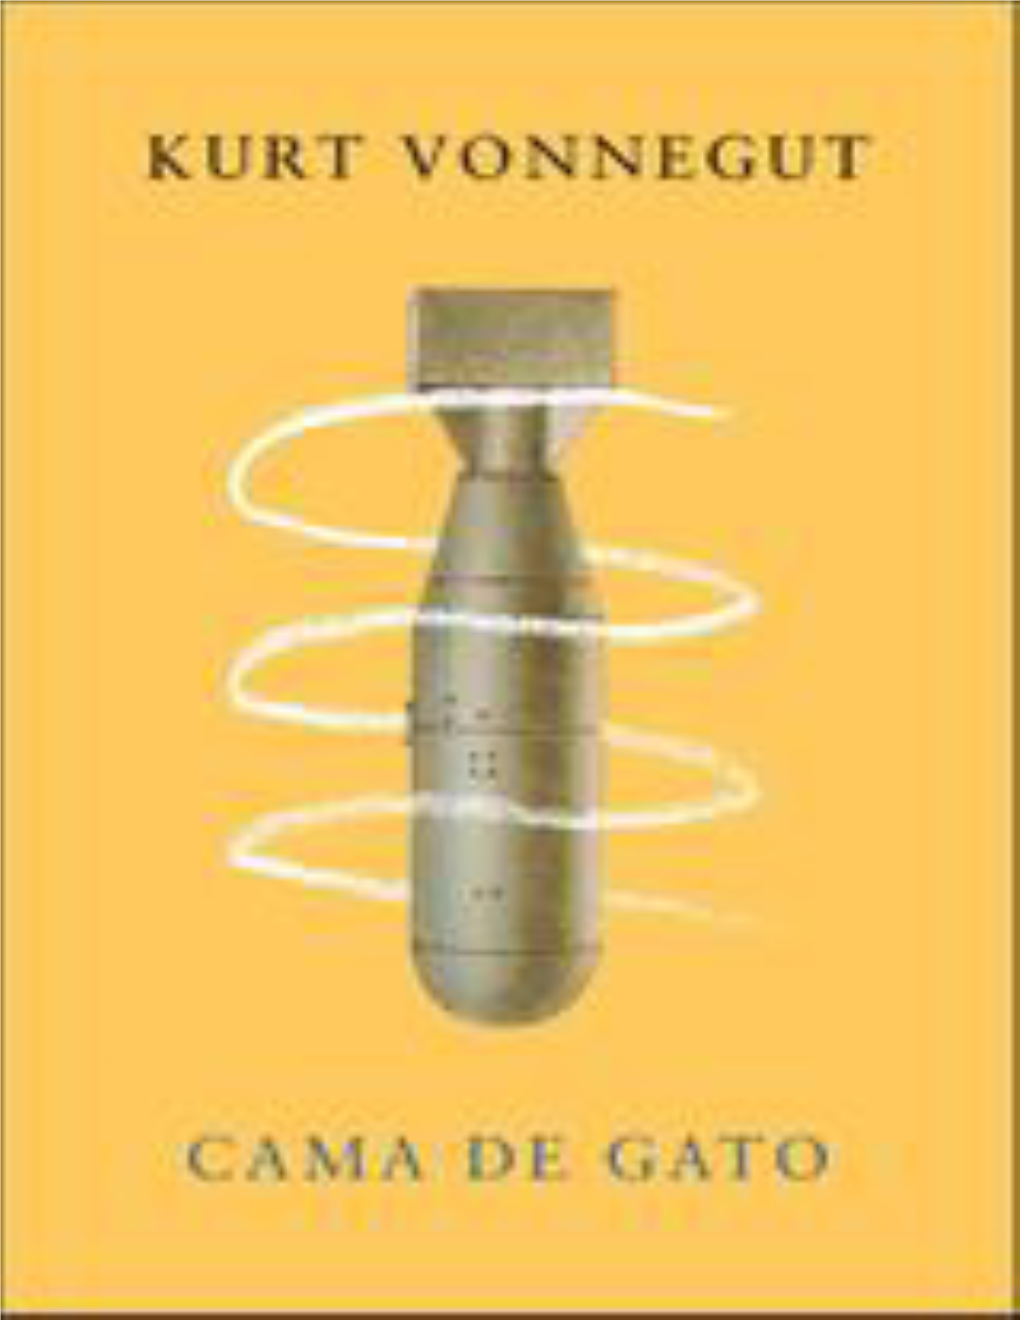 Kurt Vonnegut Cama De Gato.Pdf